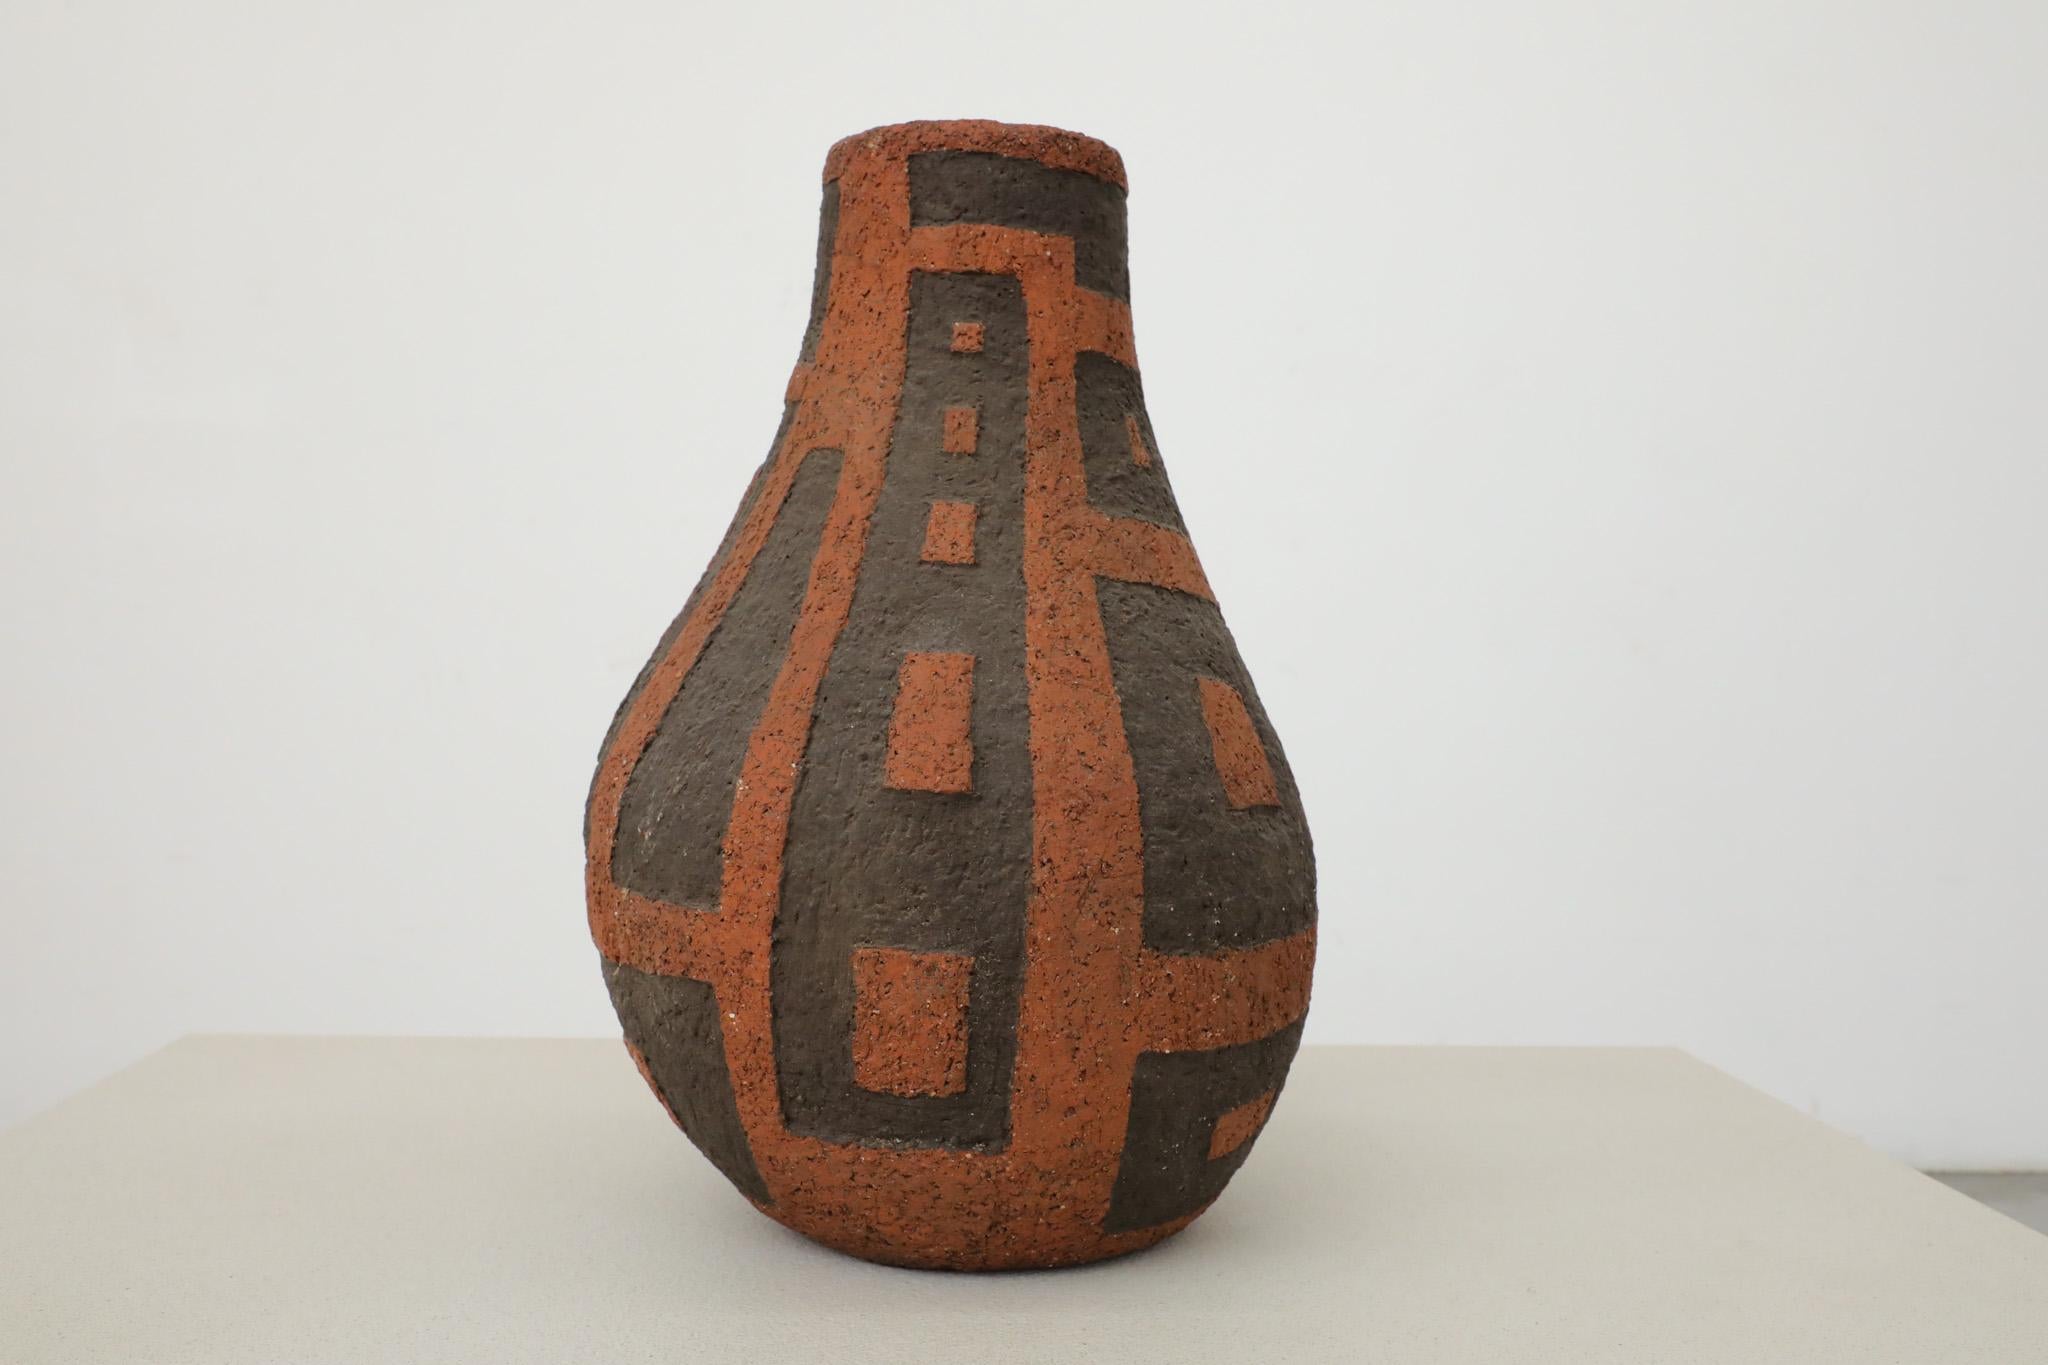 Large Red & Brown Ceramic Carstens Tönniehof Vase by Heukeroth & Siery For Sale 2